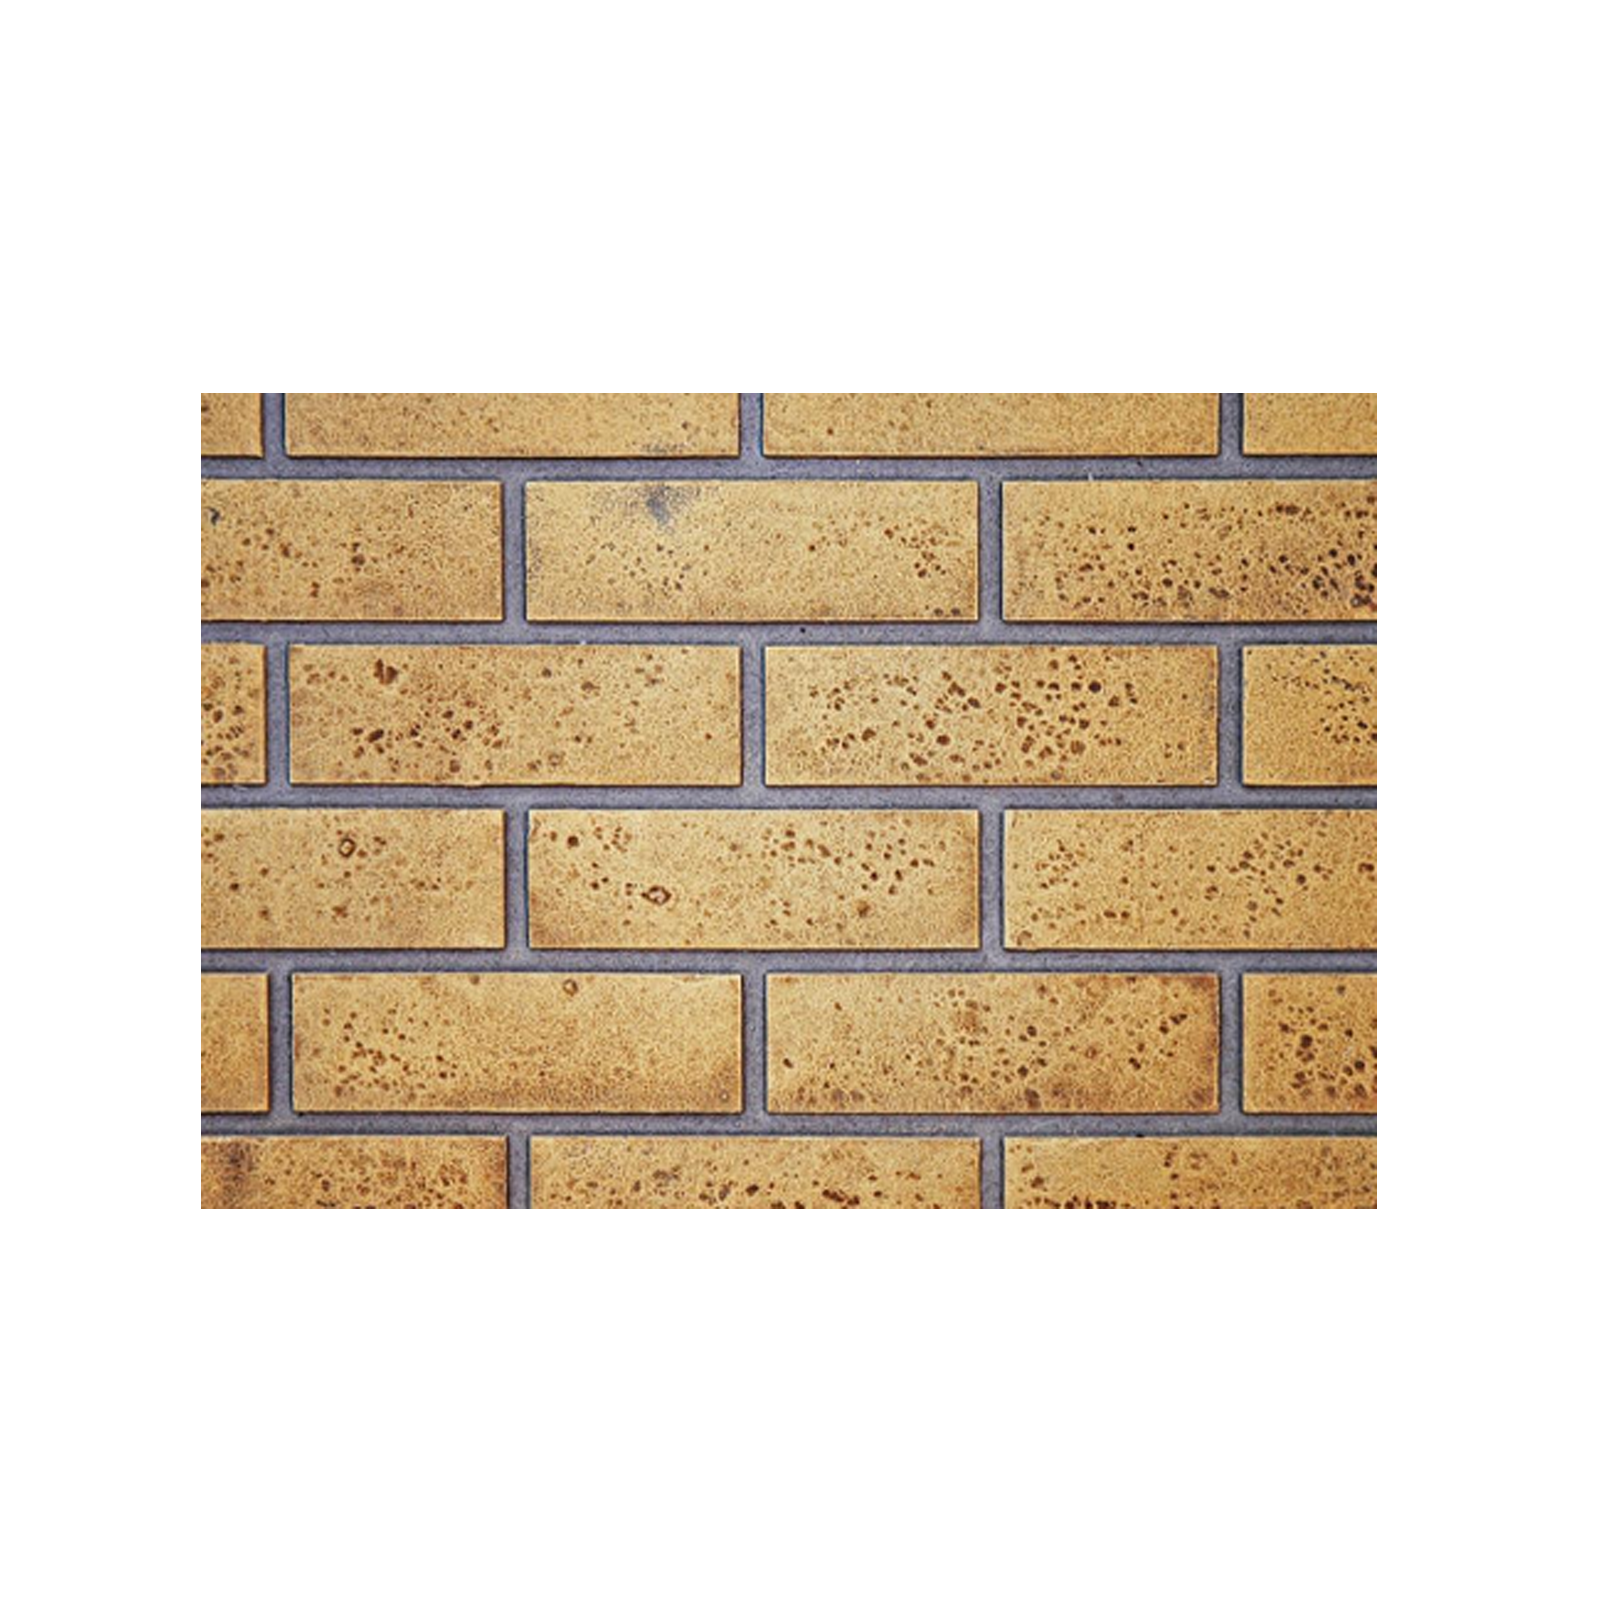 Napoleon Sandstone Decorative Brick Panels - GD842-1KT